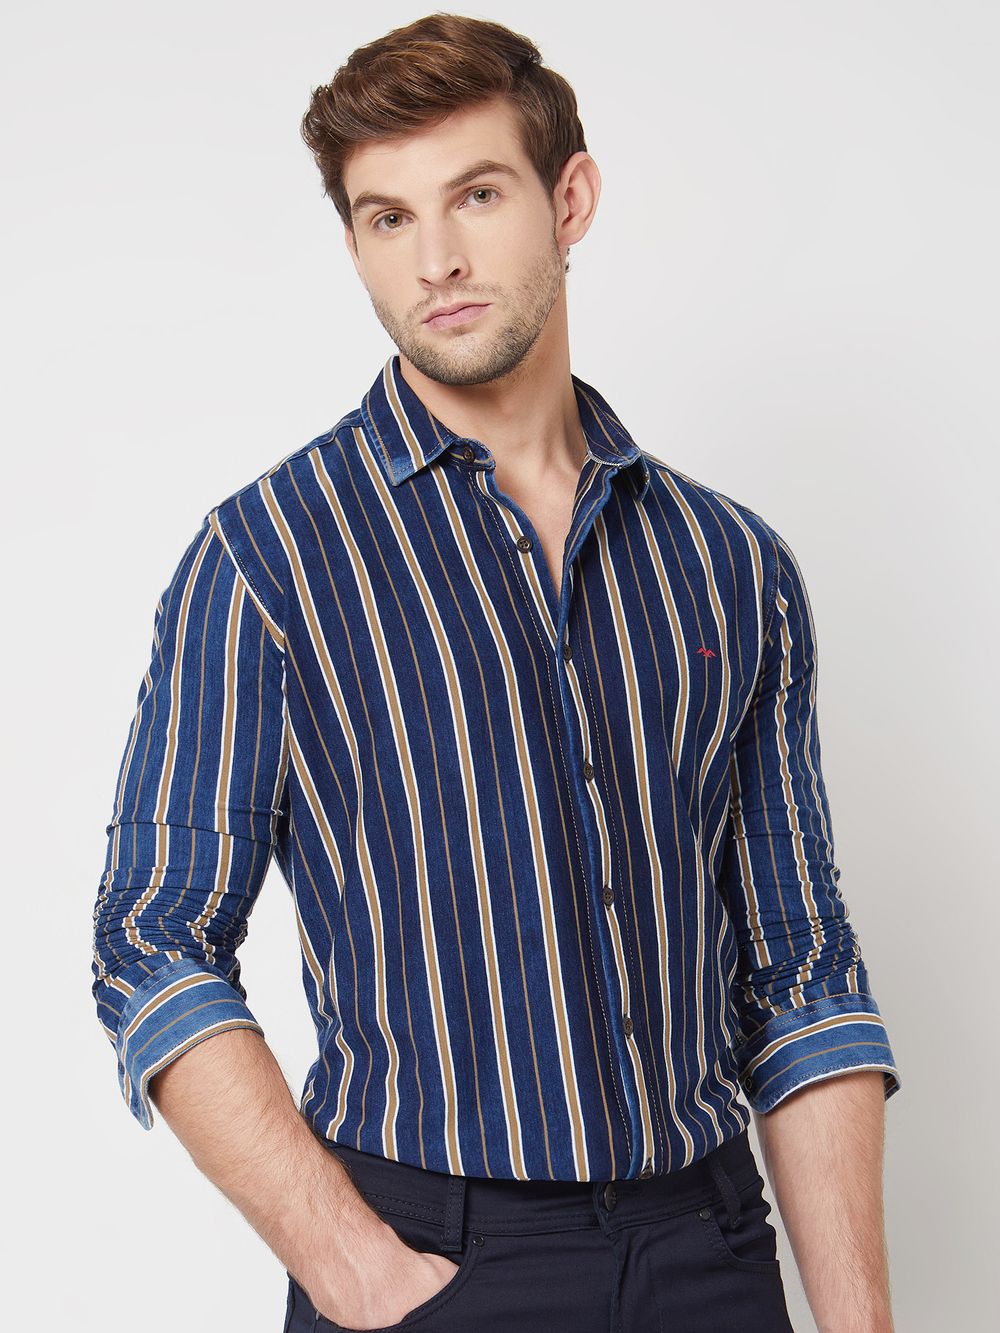 Indigo Blue Knitted Stripe Slim Fit Casual Shirt